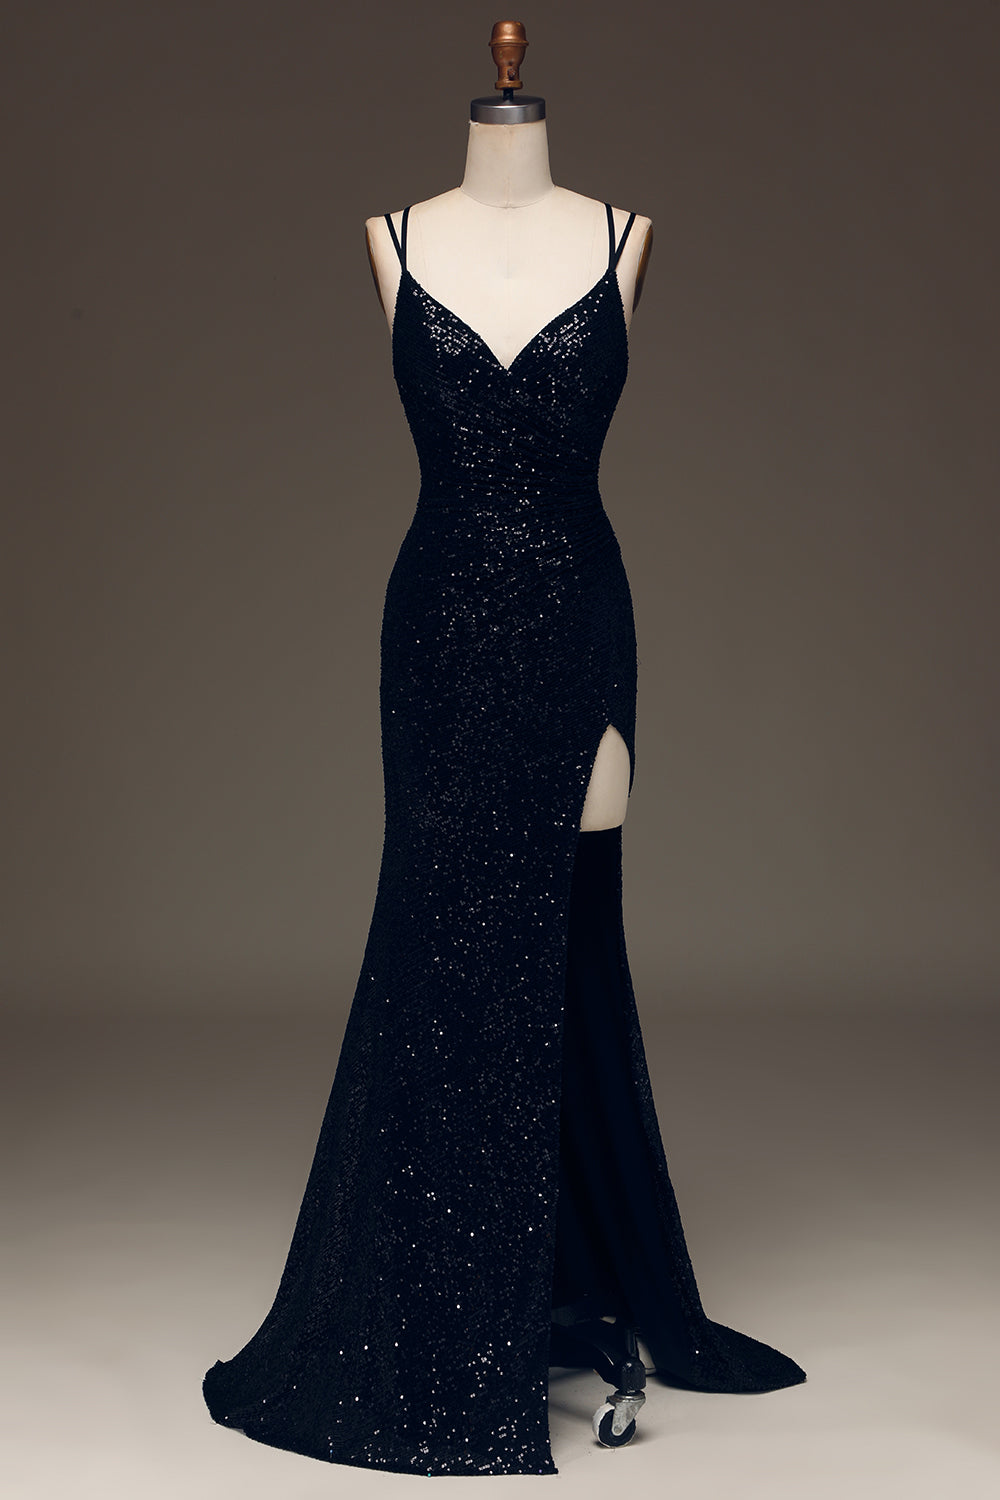 Sparky Black Long Prom Dress with Slit_1